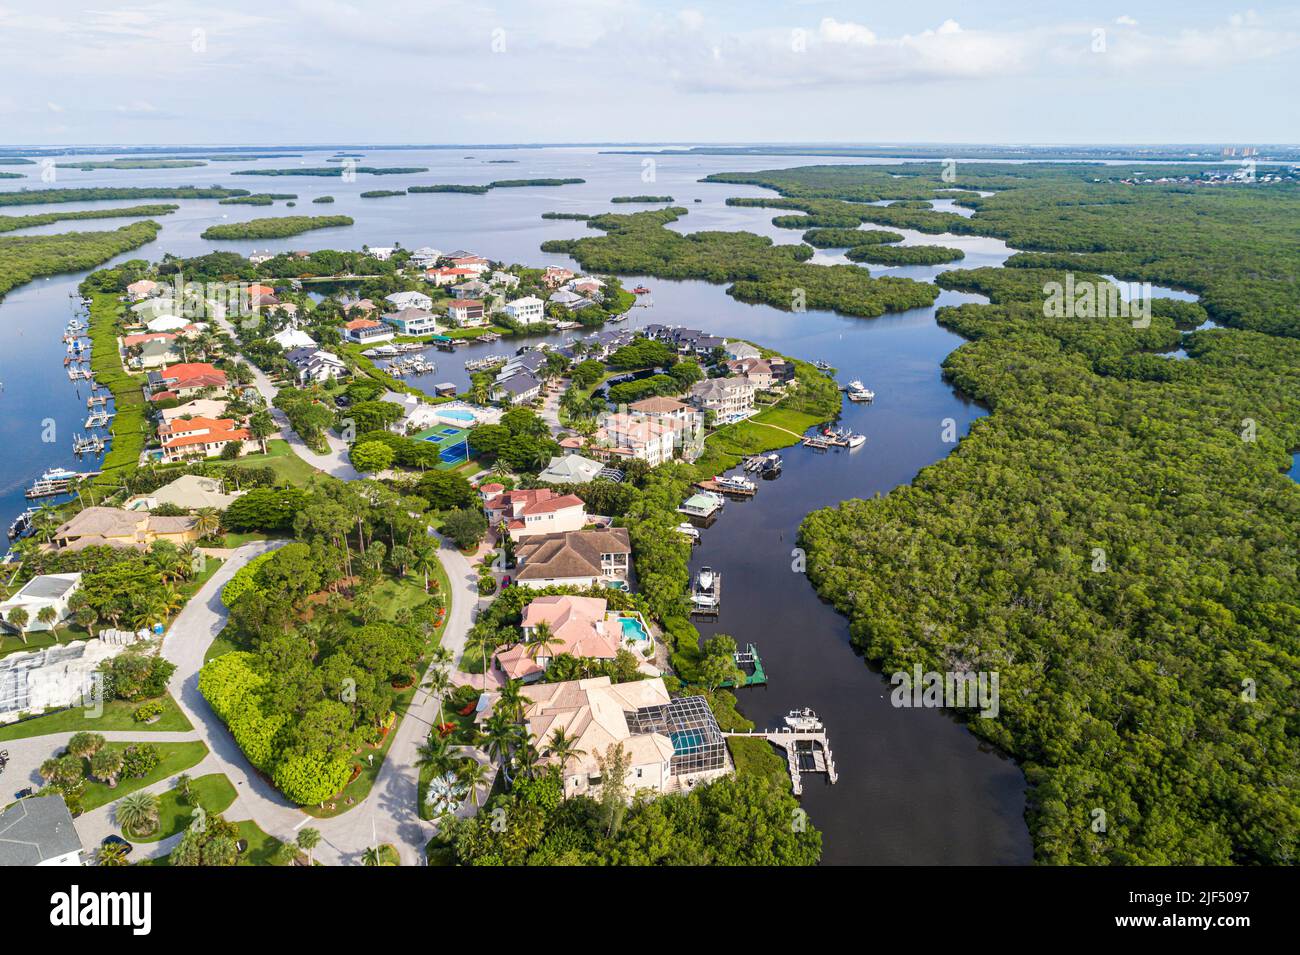 Fort Ft. Myers Florida, Connie Mack Island cerrado comunidad privada casas desarrollo invadment, humedales Punta Rassa Cove Golfo de México, aeria Foto de stock